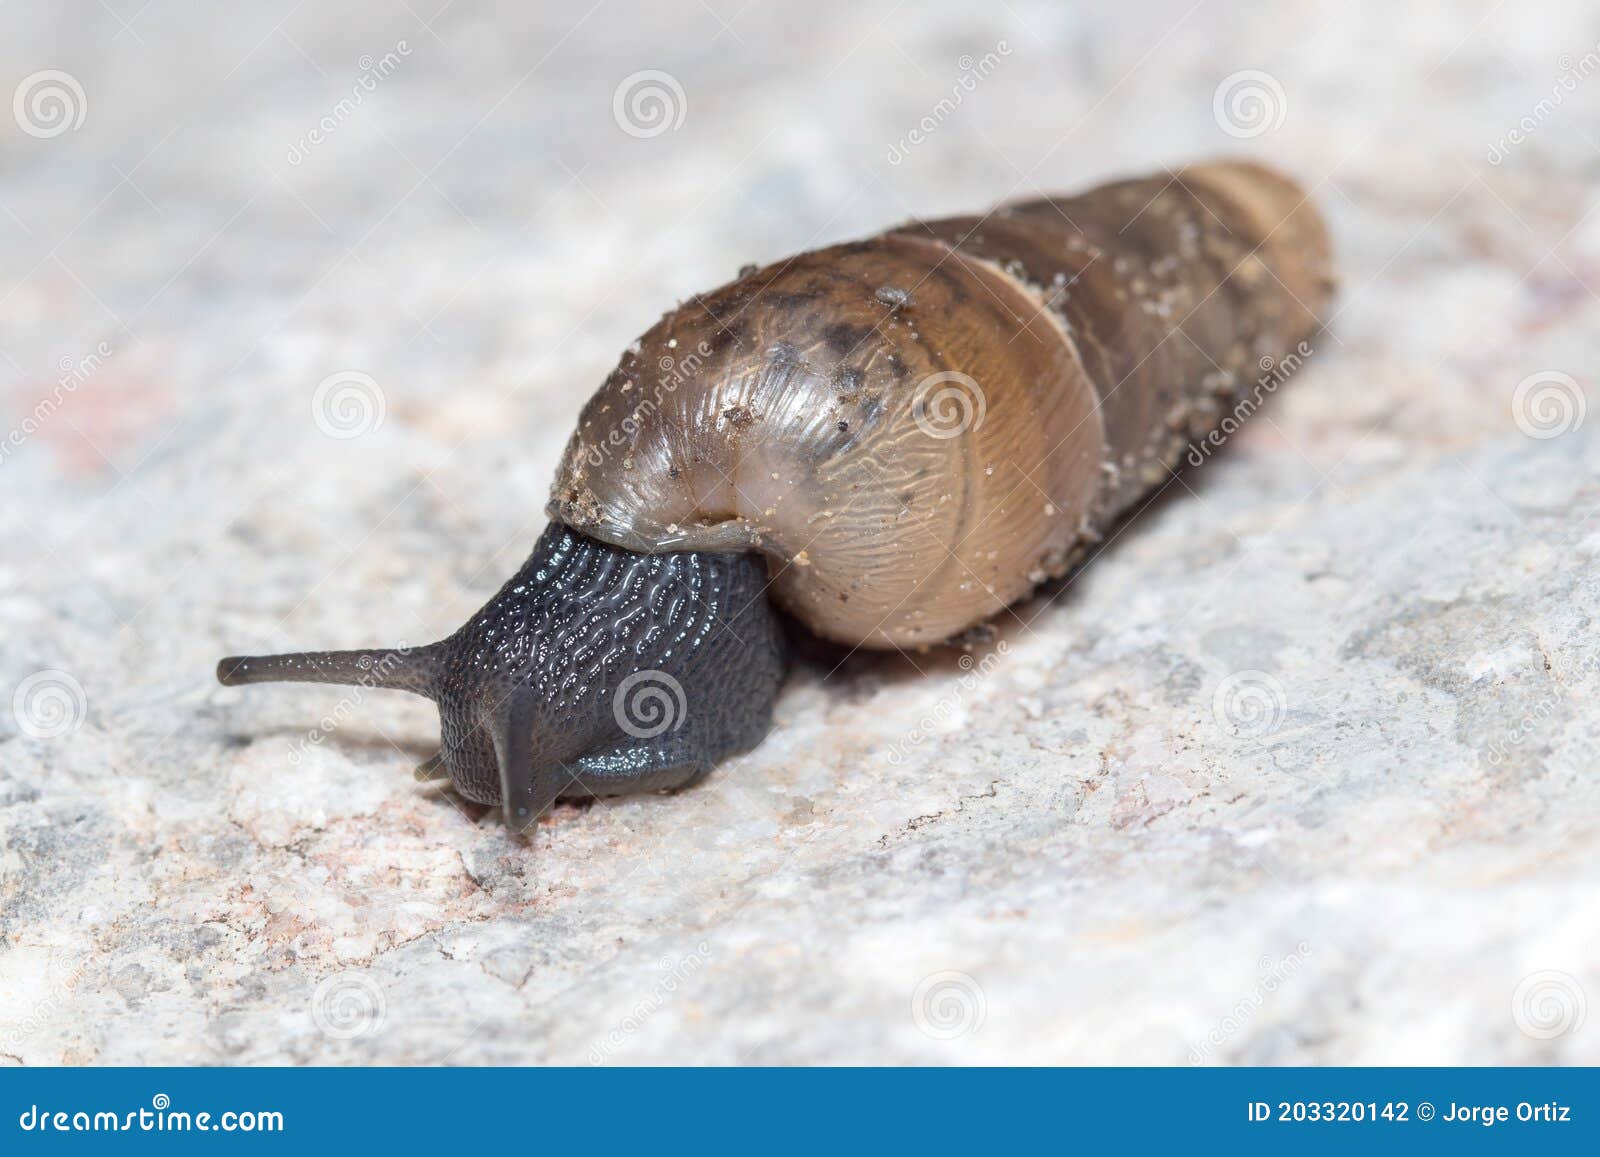 Rumina Decollata σαλιγκάρι που σαλιαρίζει σε πέτρα. Στοκ Εικόνες - εικόνα  από wildlife, bugatti: 203320142